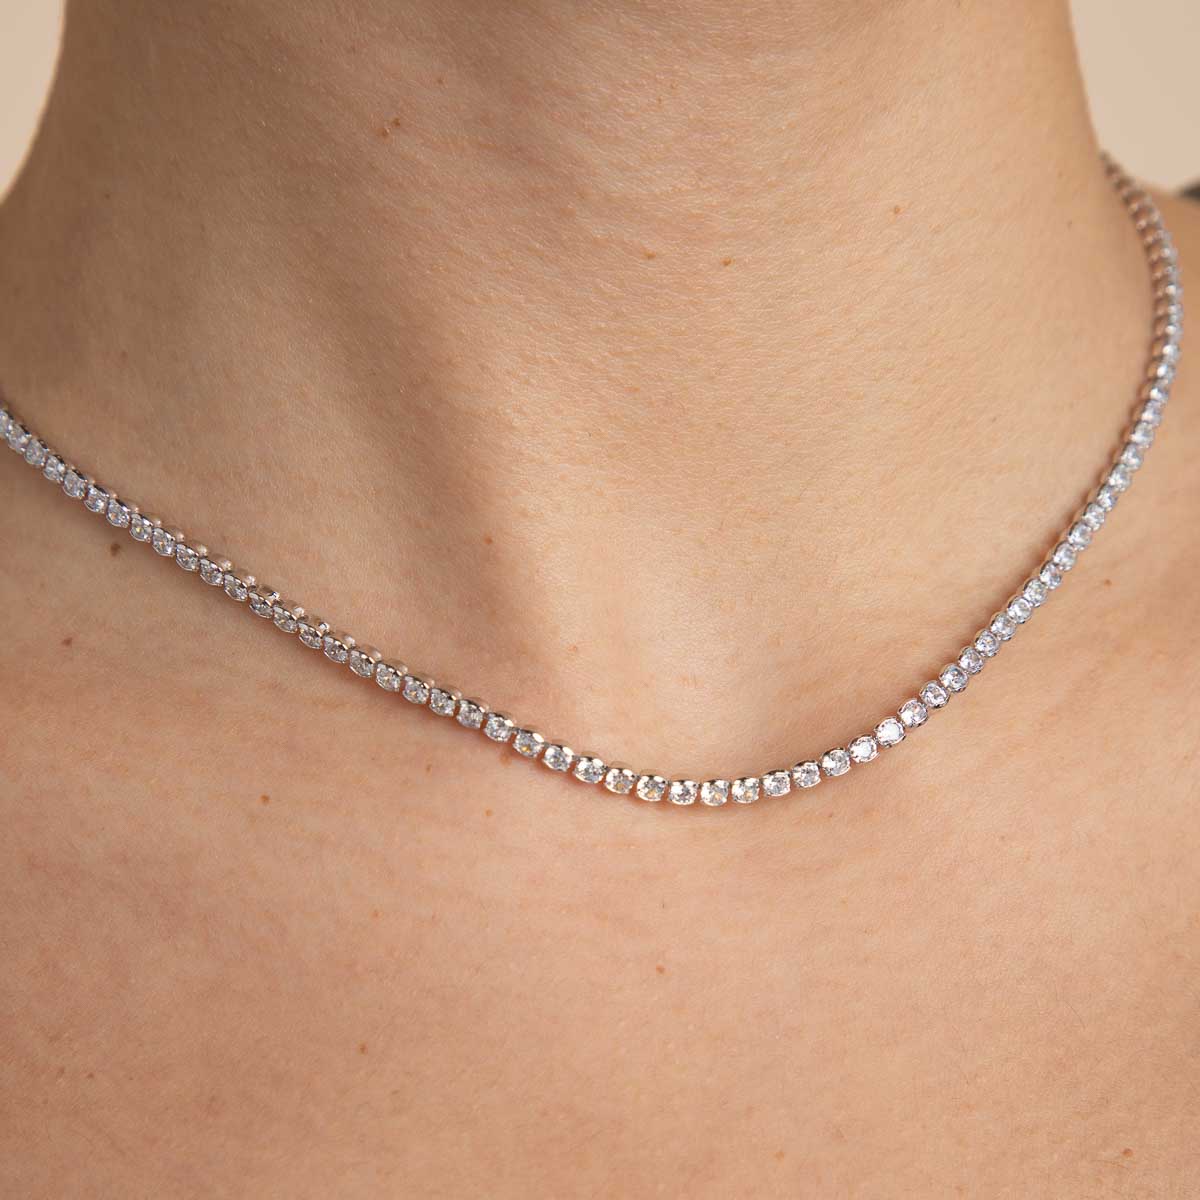 Gleam Tennis Chain Necklace in Silver